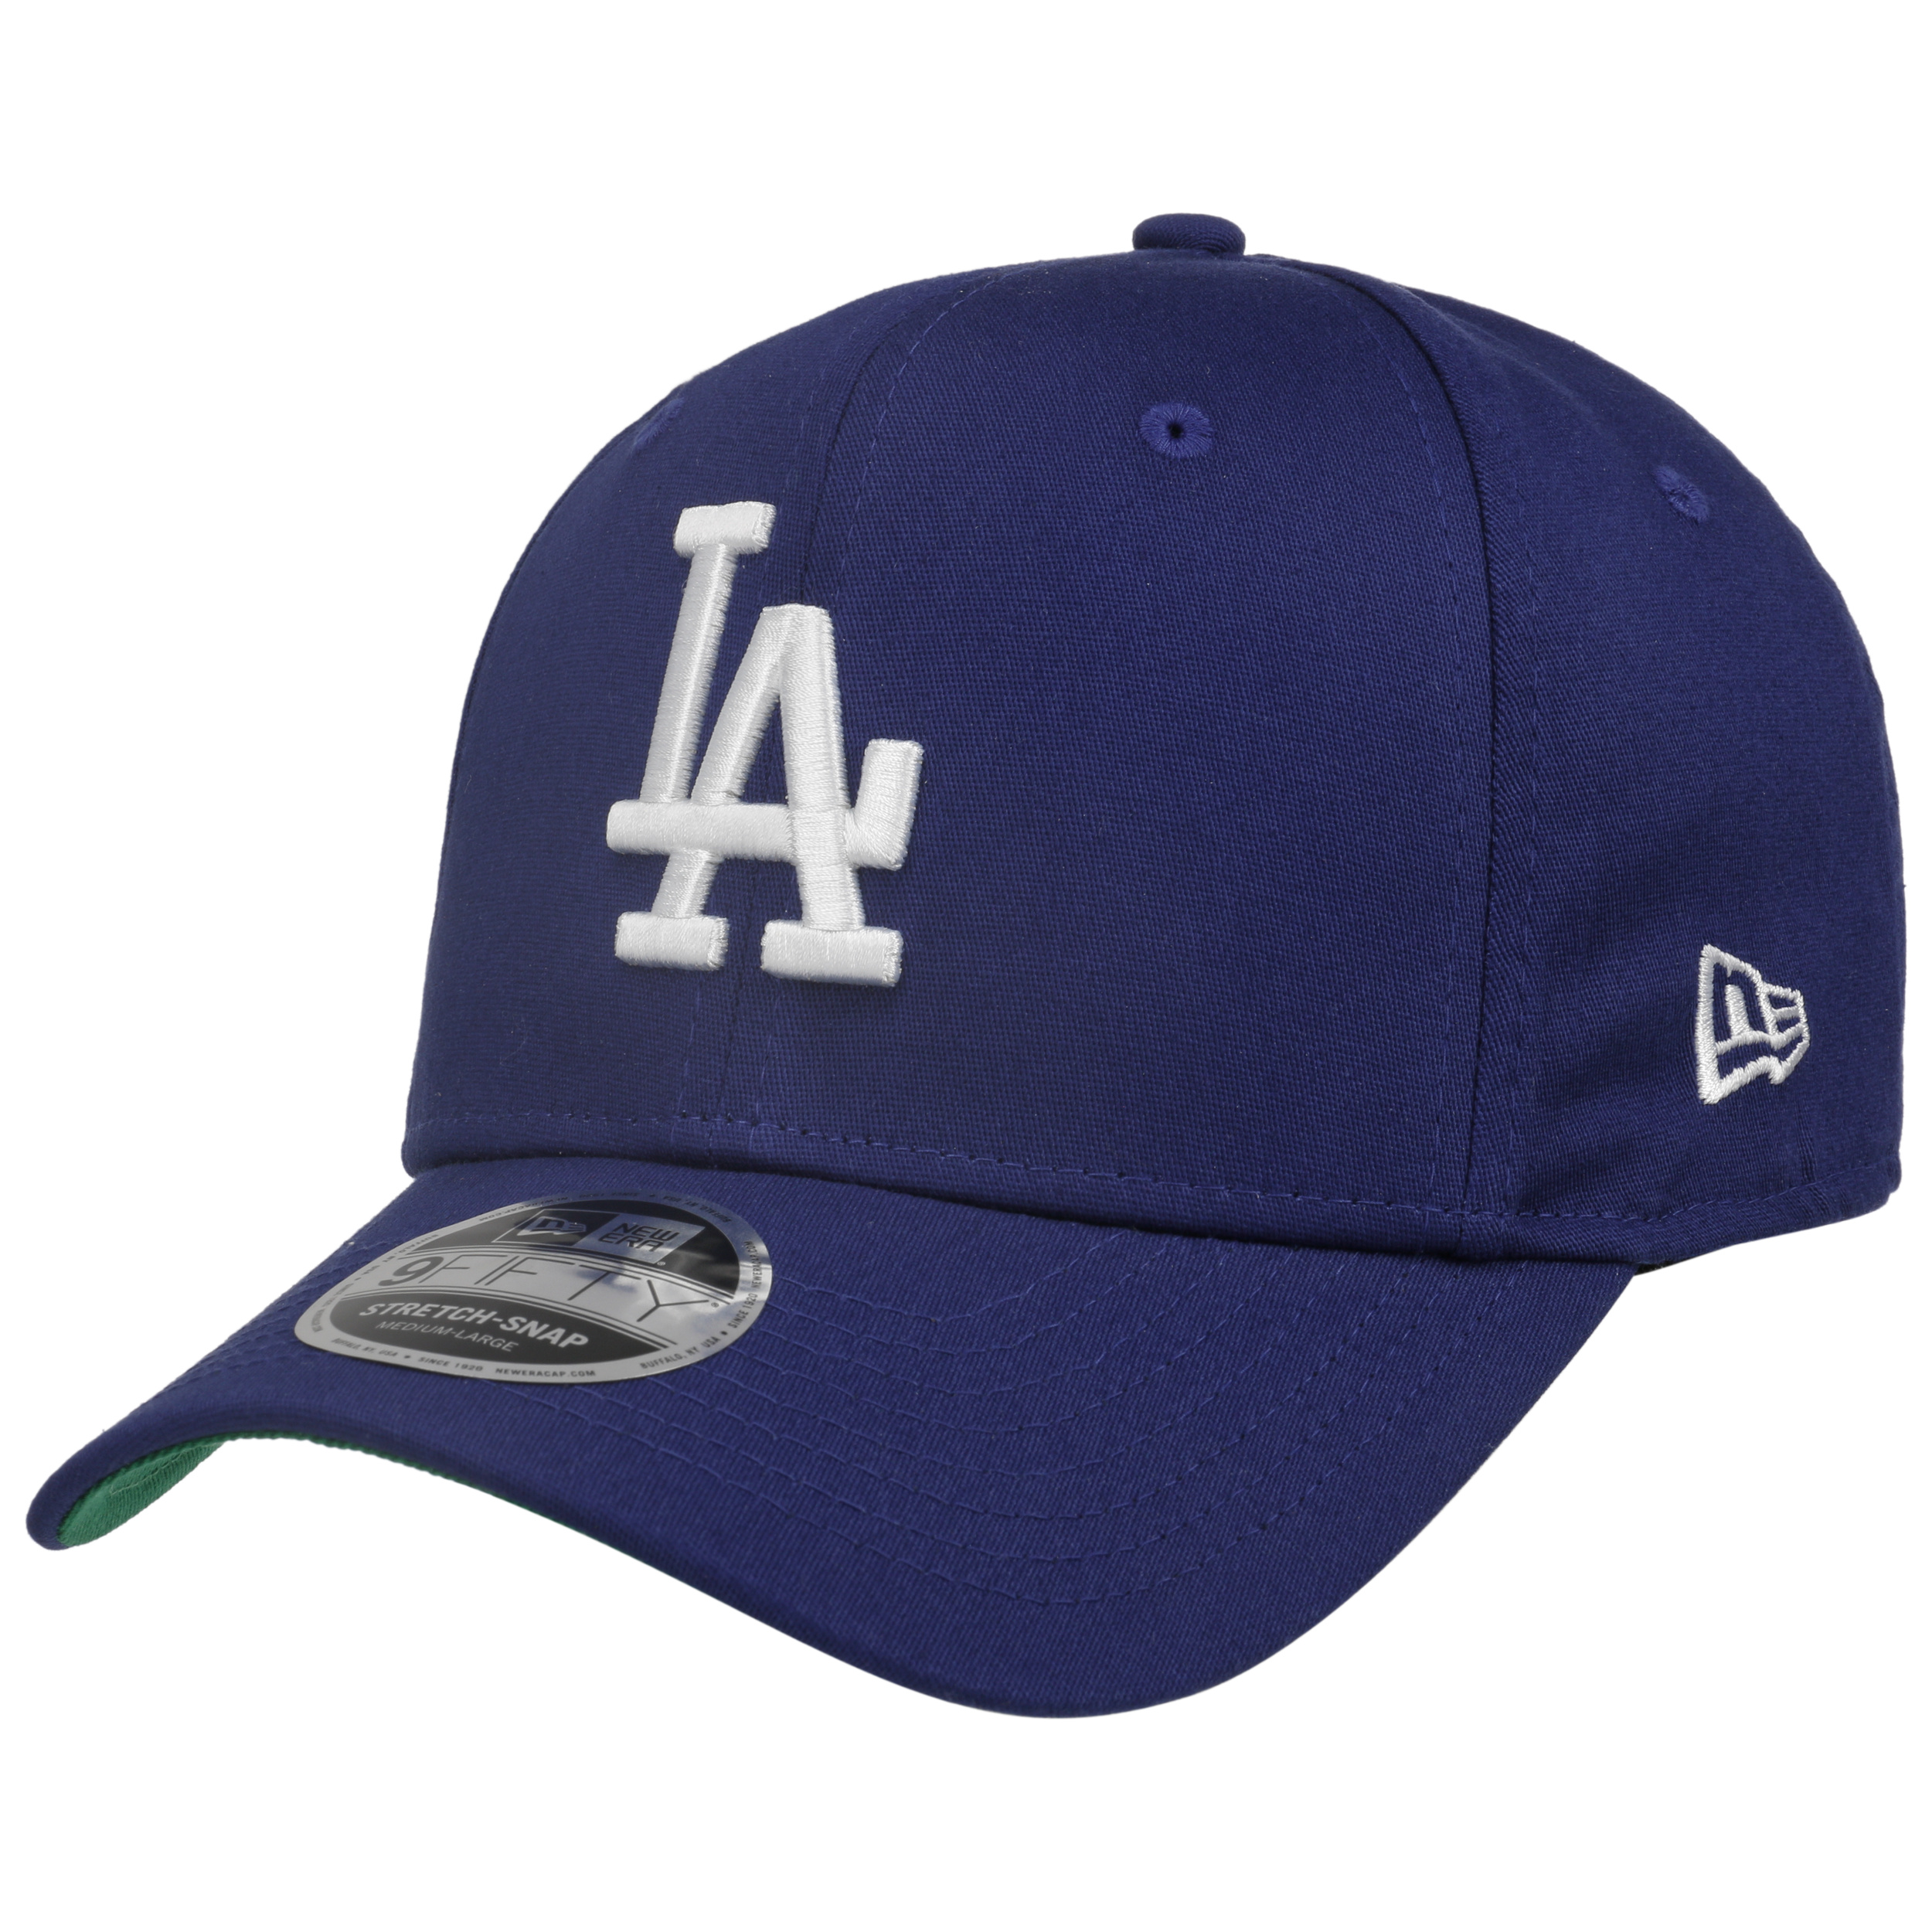 https://img.hatshopping.co.uk/9Fifty-Stretch-Snap-MLB-LA-Dodgers-Cap-by-New-Era-royal-blue.63893_rf58.jpg